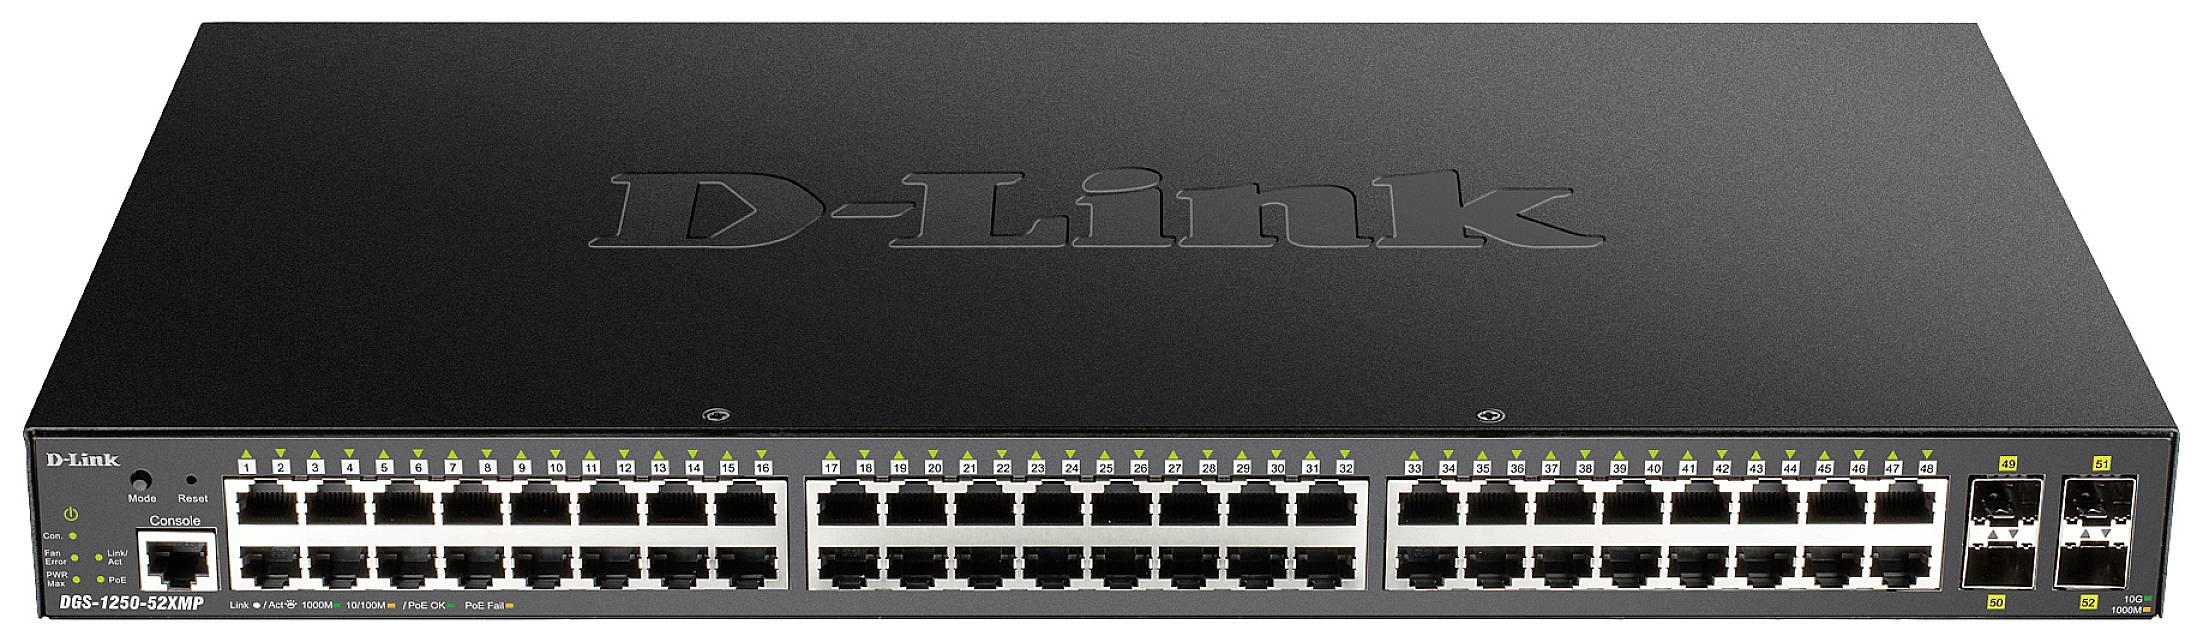 D-LINK Switch / 52-Port Smart Managed PoE Gigabit Stack Switch, dlink green 3.0, 24x 10/100/1000Mbit